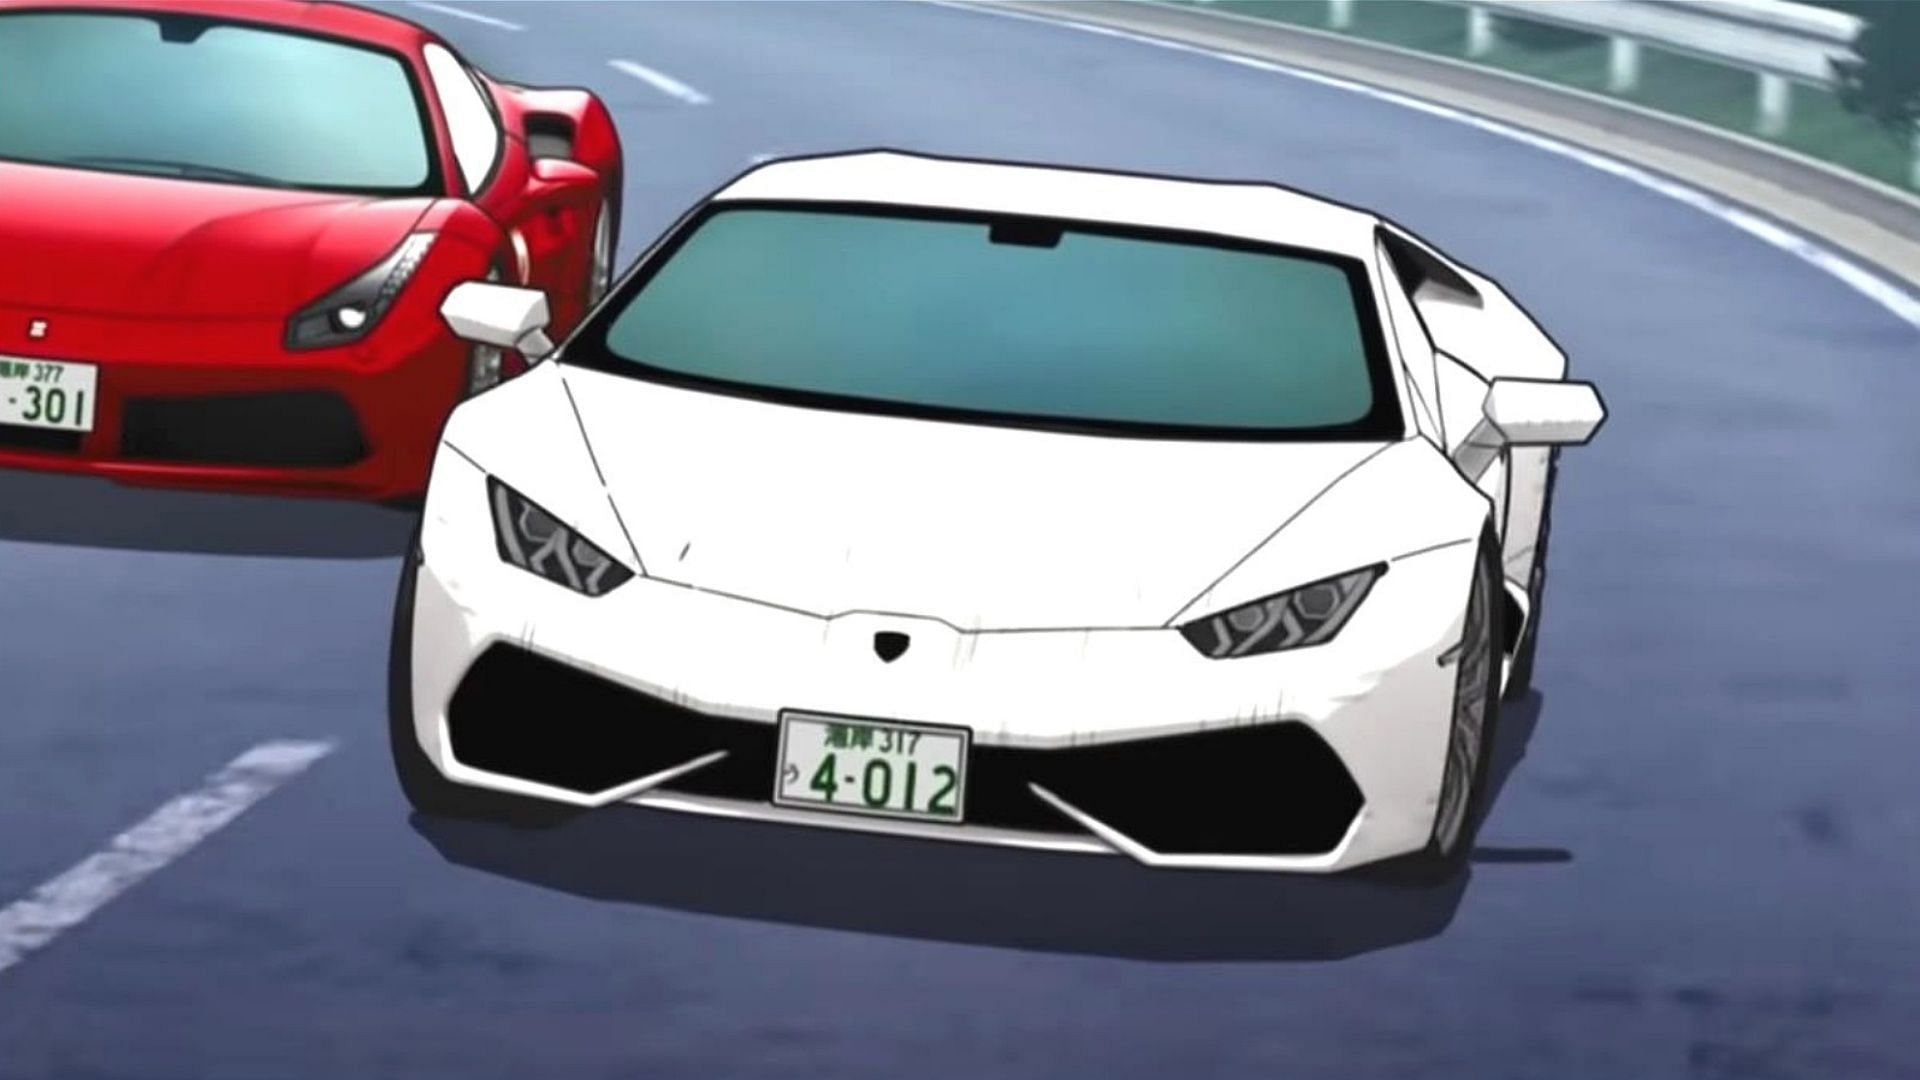 Familiar Initial D Drivers Return for MF Ghost Anime - Crunchyroll News